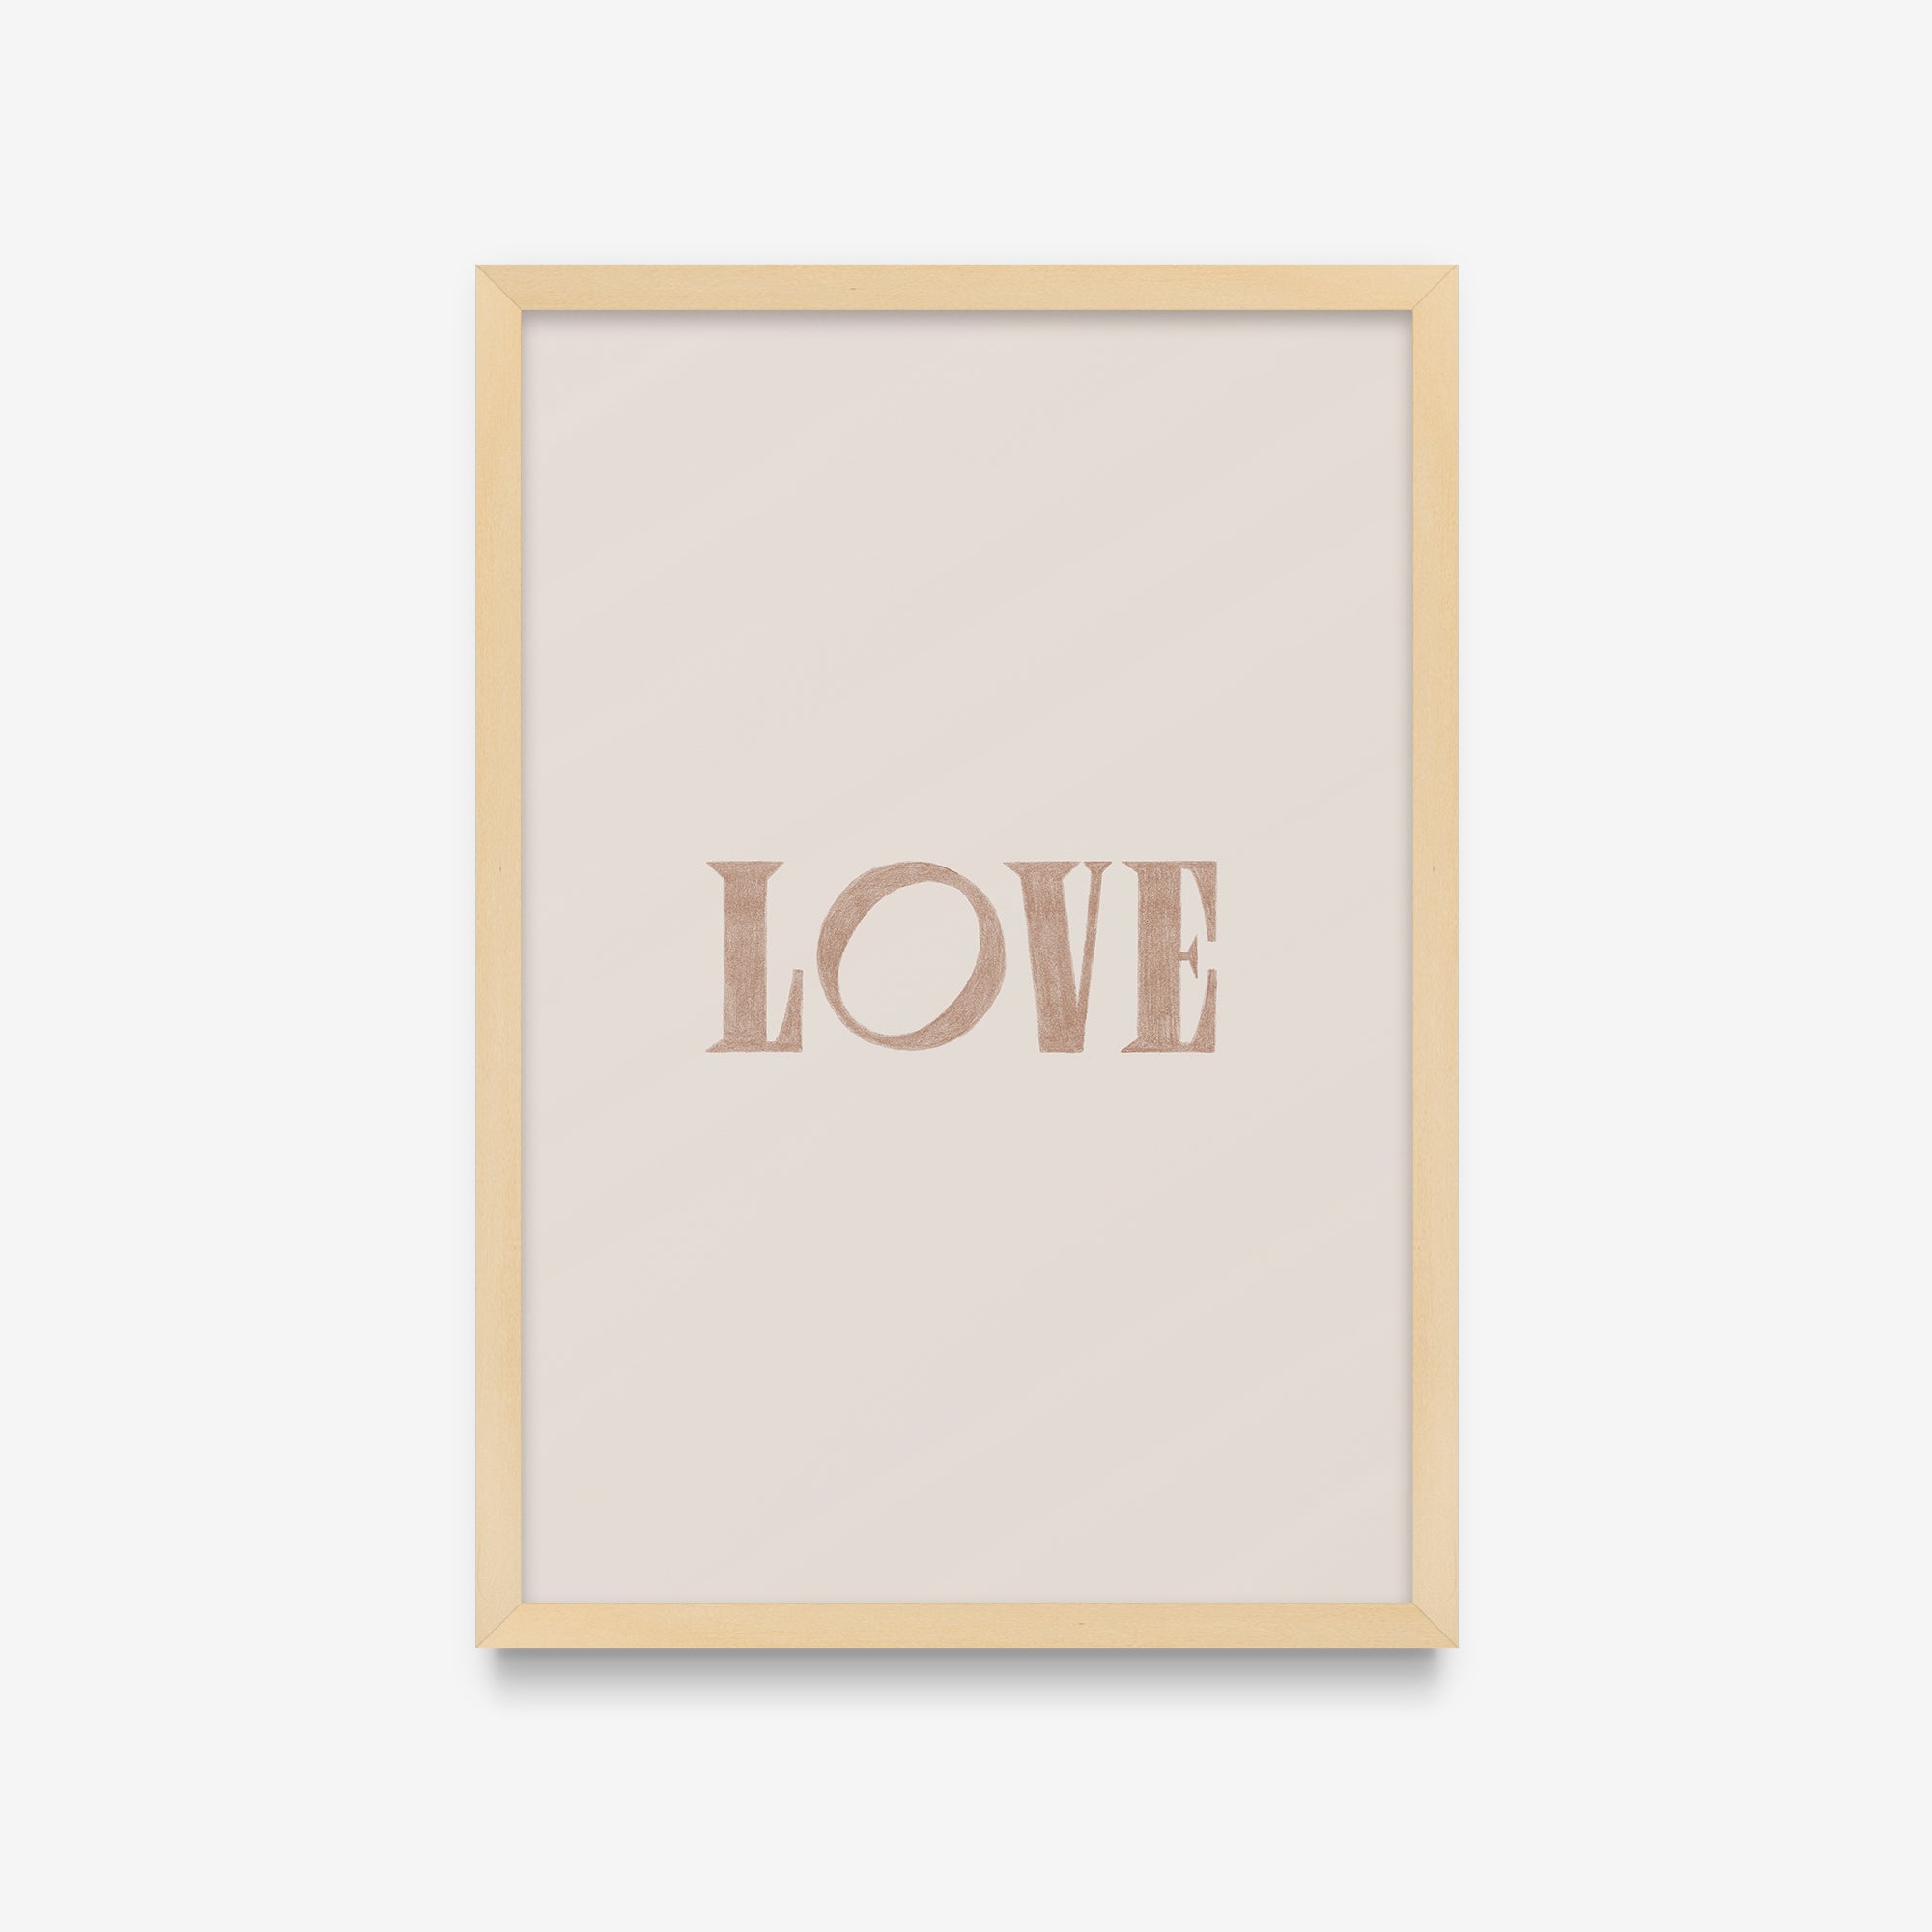 Frases - Love | Estúdio Amor